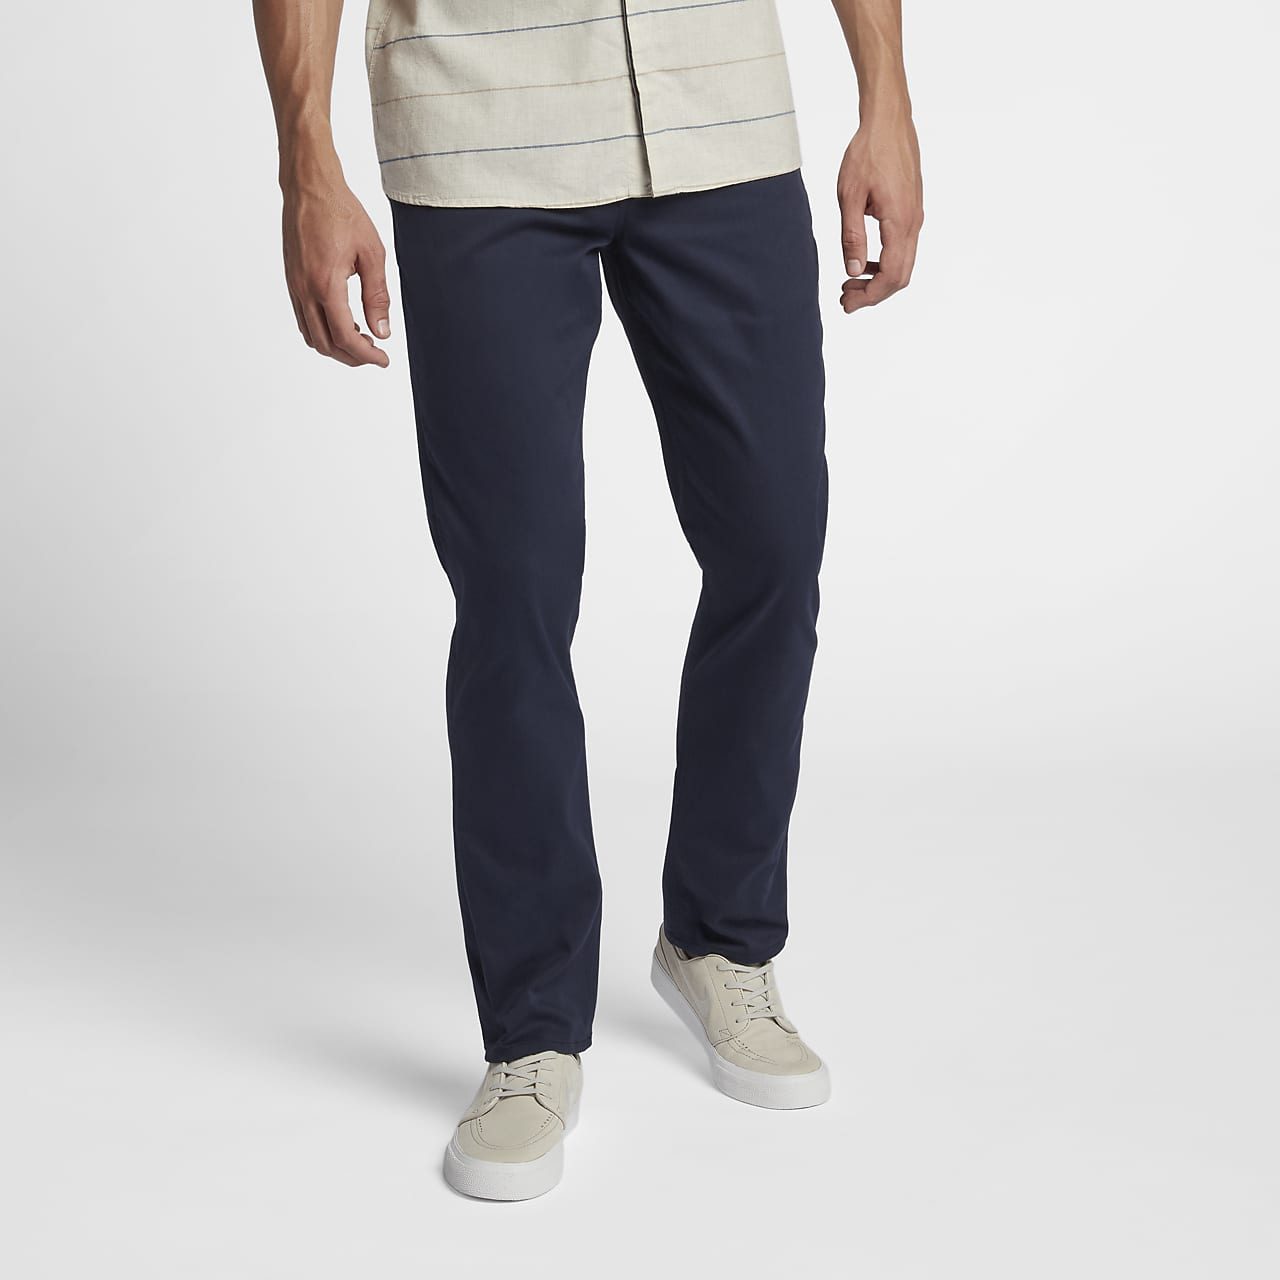 Pantalones para hombre Hurley Worker. Nike.com